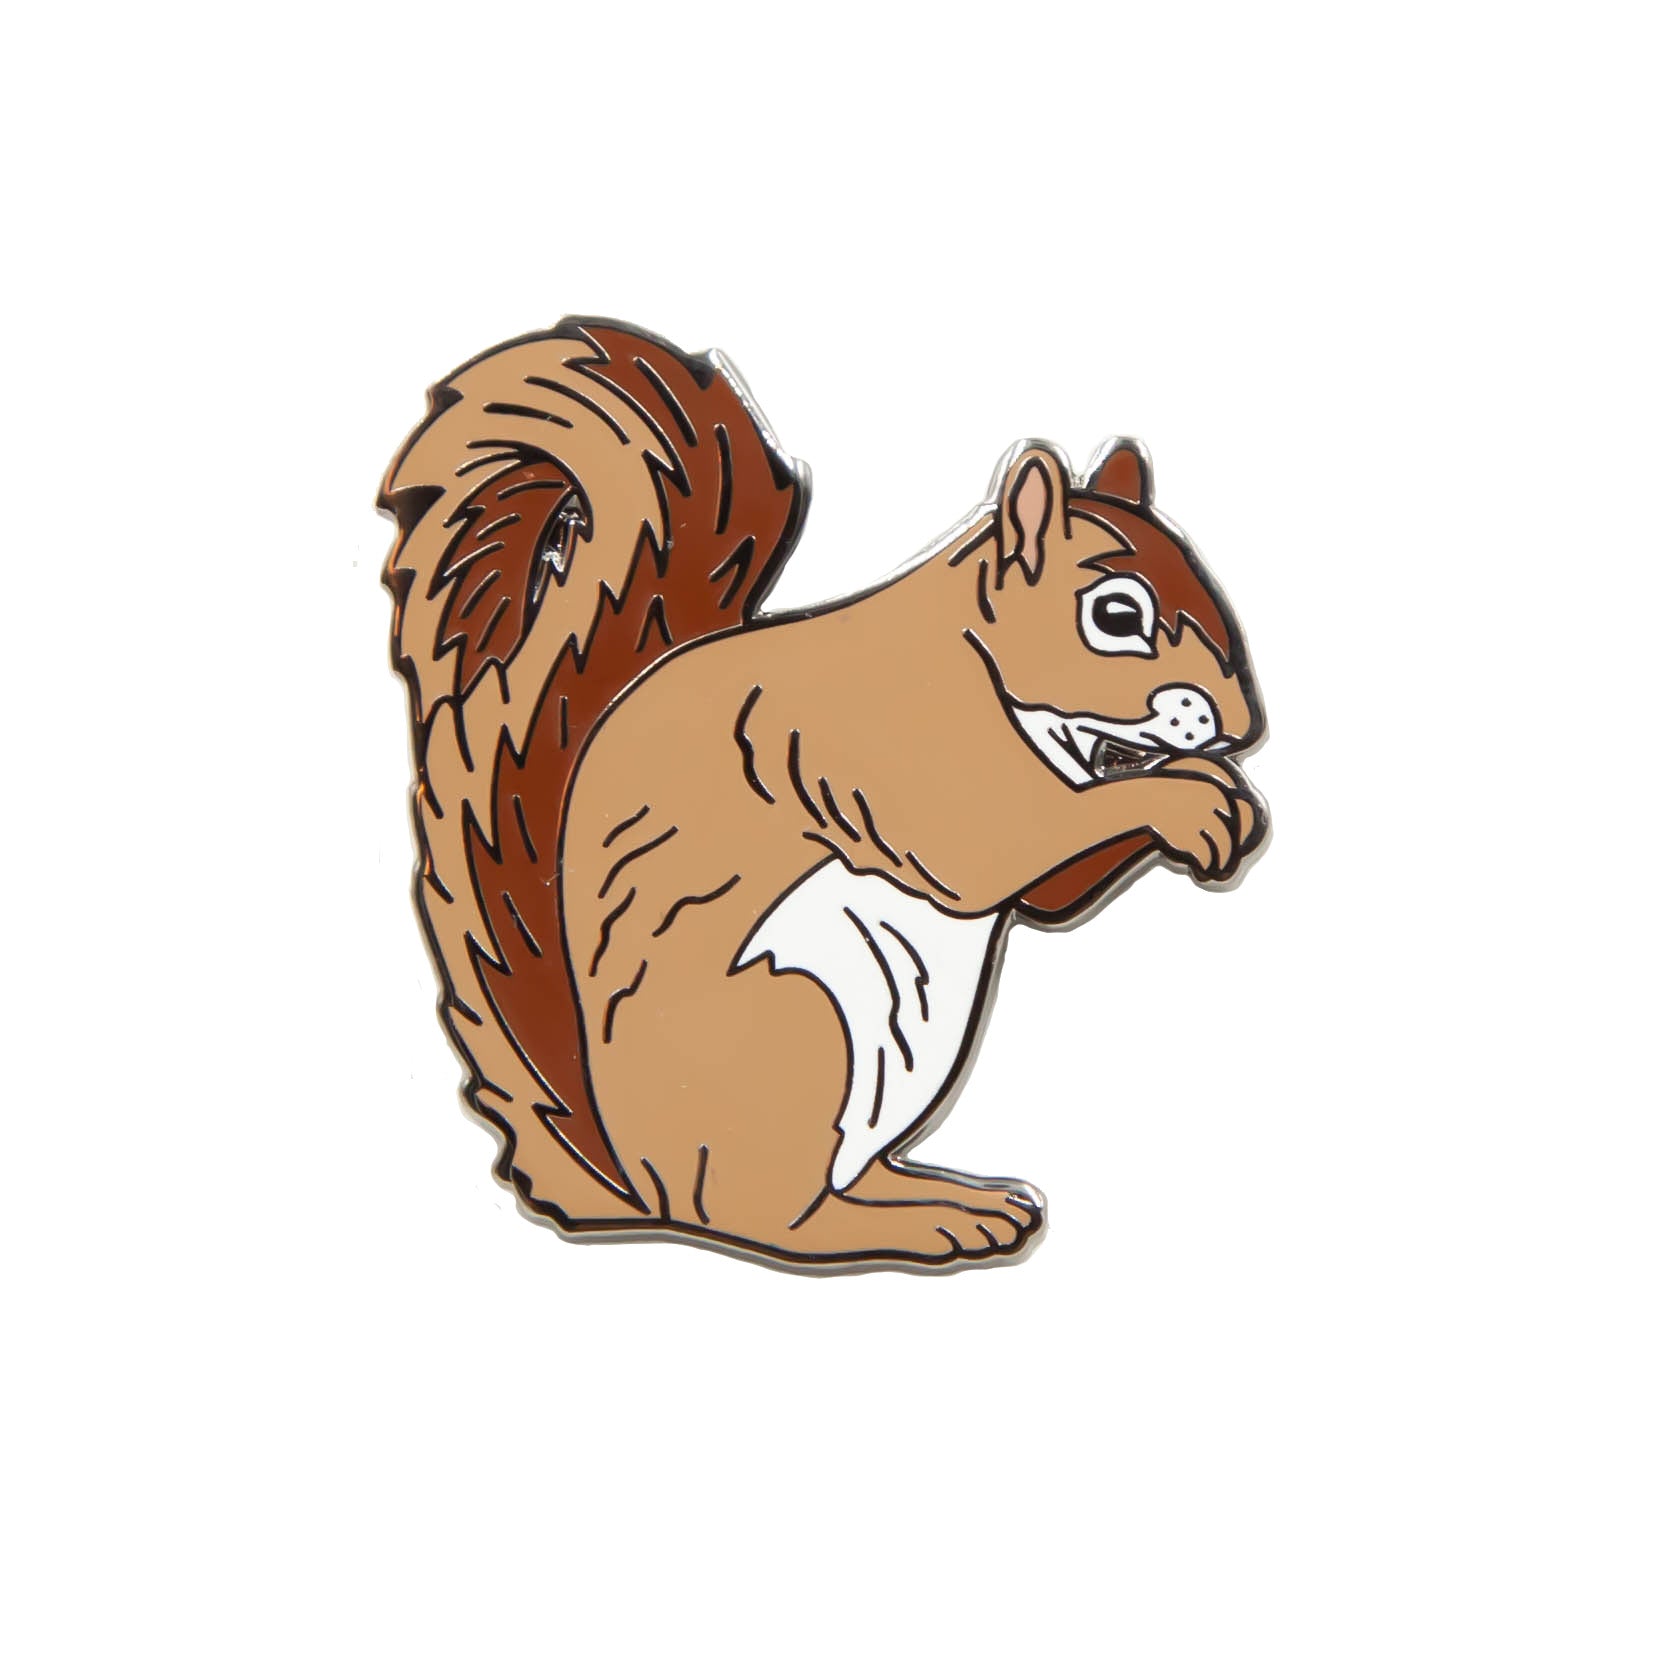 Enamel Pin - Squirrel - Natural Values